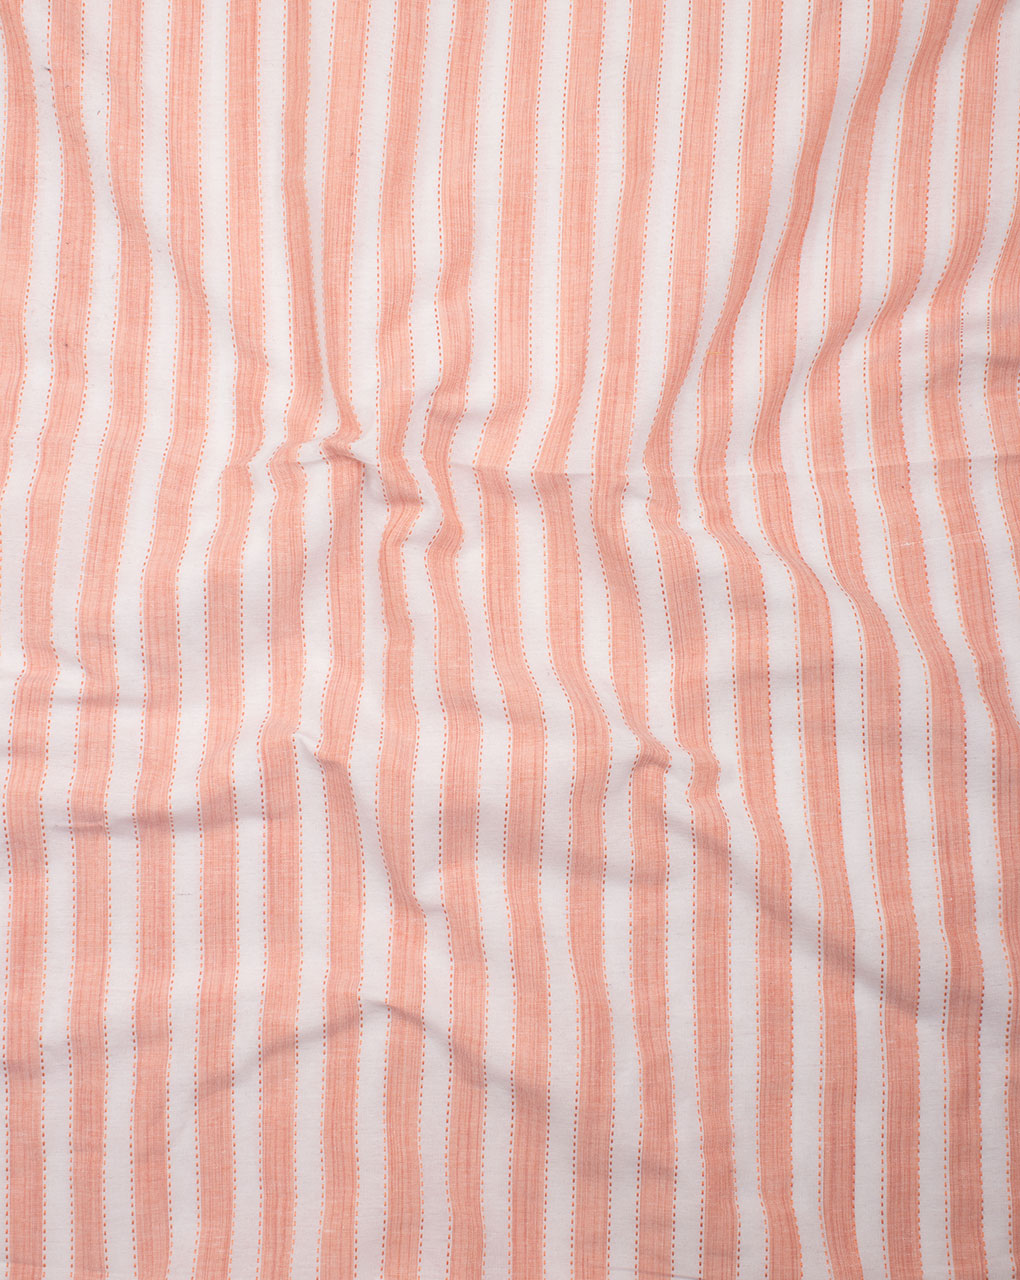 Orange White Stripes Pattern Woven Loom Textured Cotton Fabric - Fabriclore.com